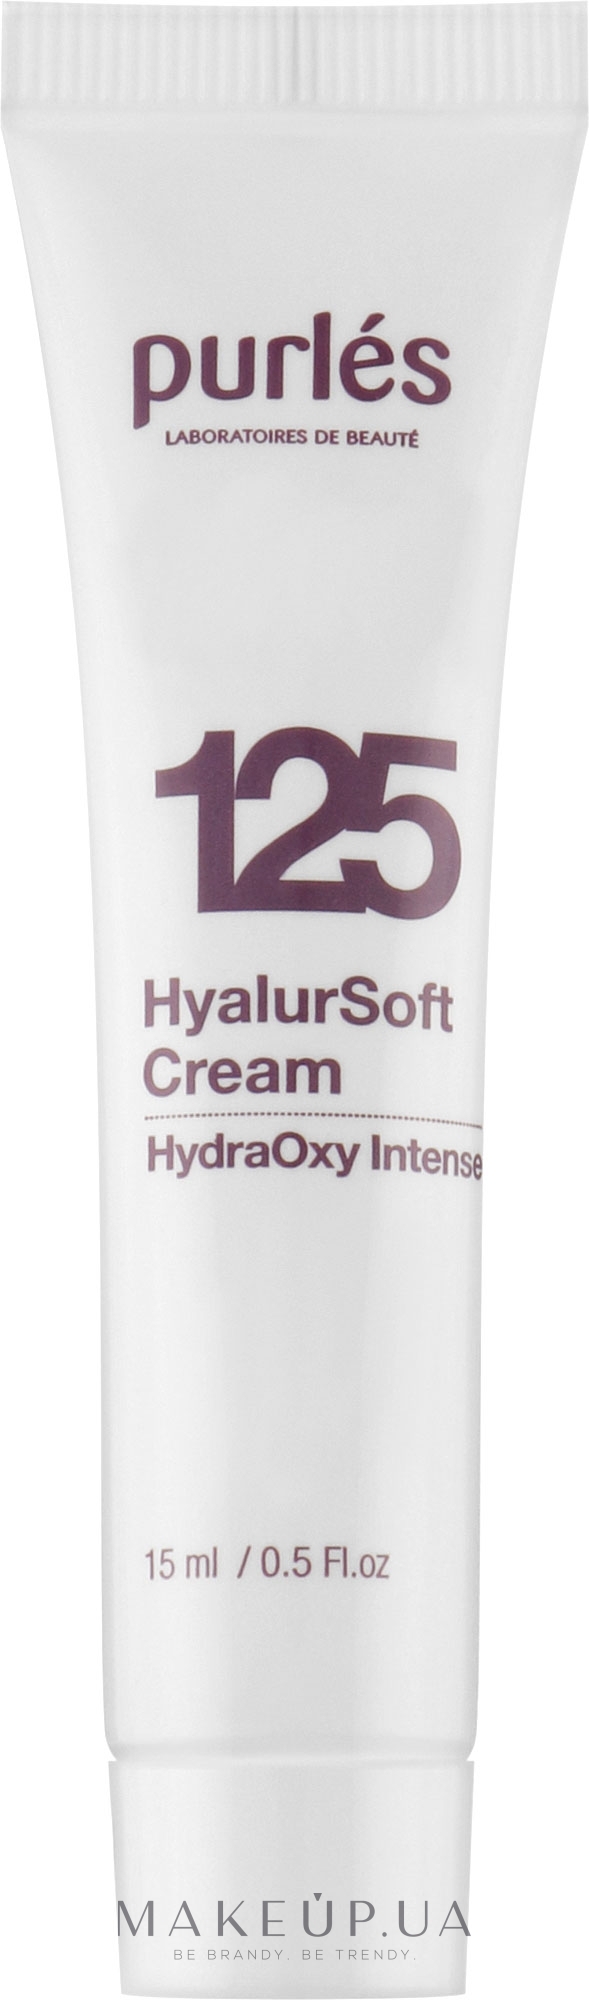 Гиалуроновый крем увлажняющий - Purles 125 HydraOxy Intense HyalurSoft Cream (мини) — фото 15ml